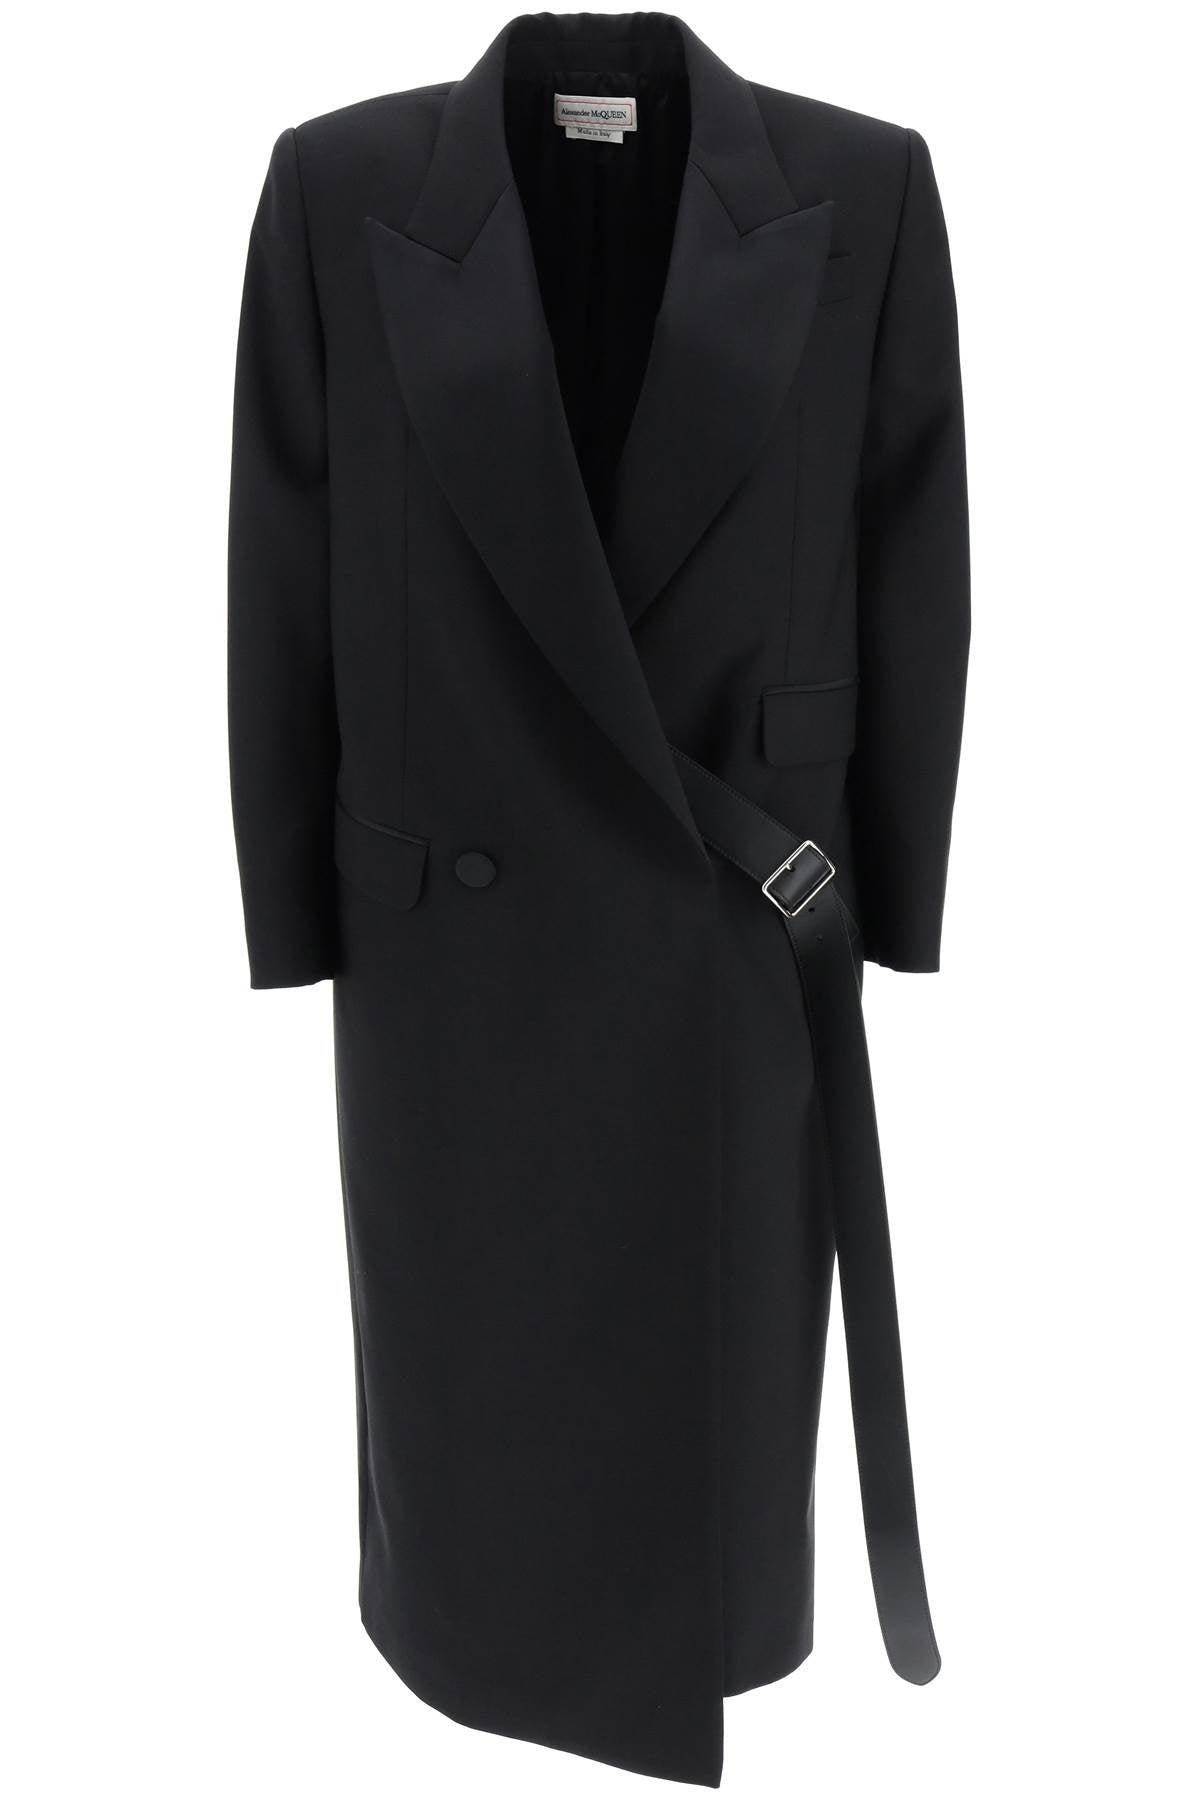 Alexander McQueen Asymmetric Design Double-breasted Coat in Black | Lyst